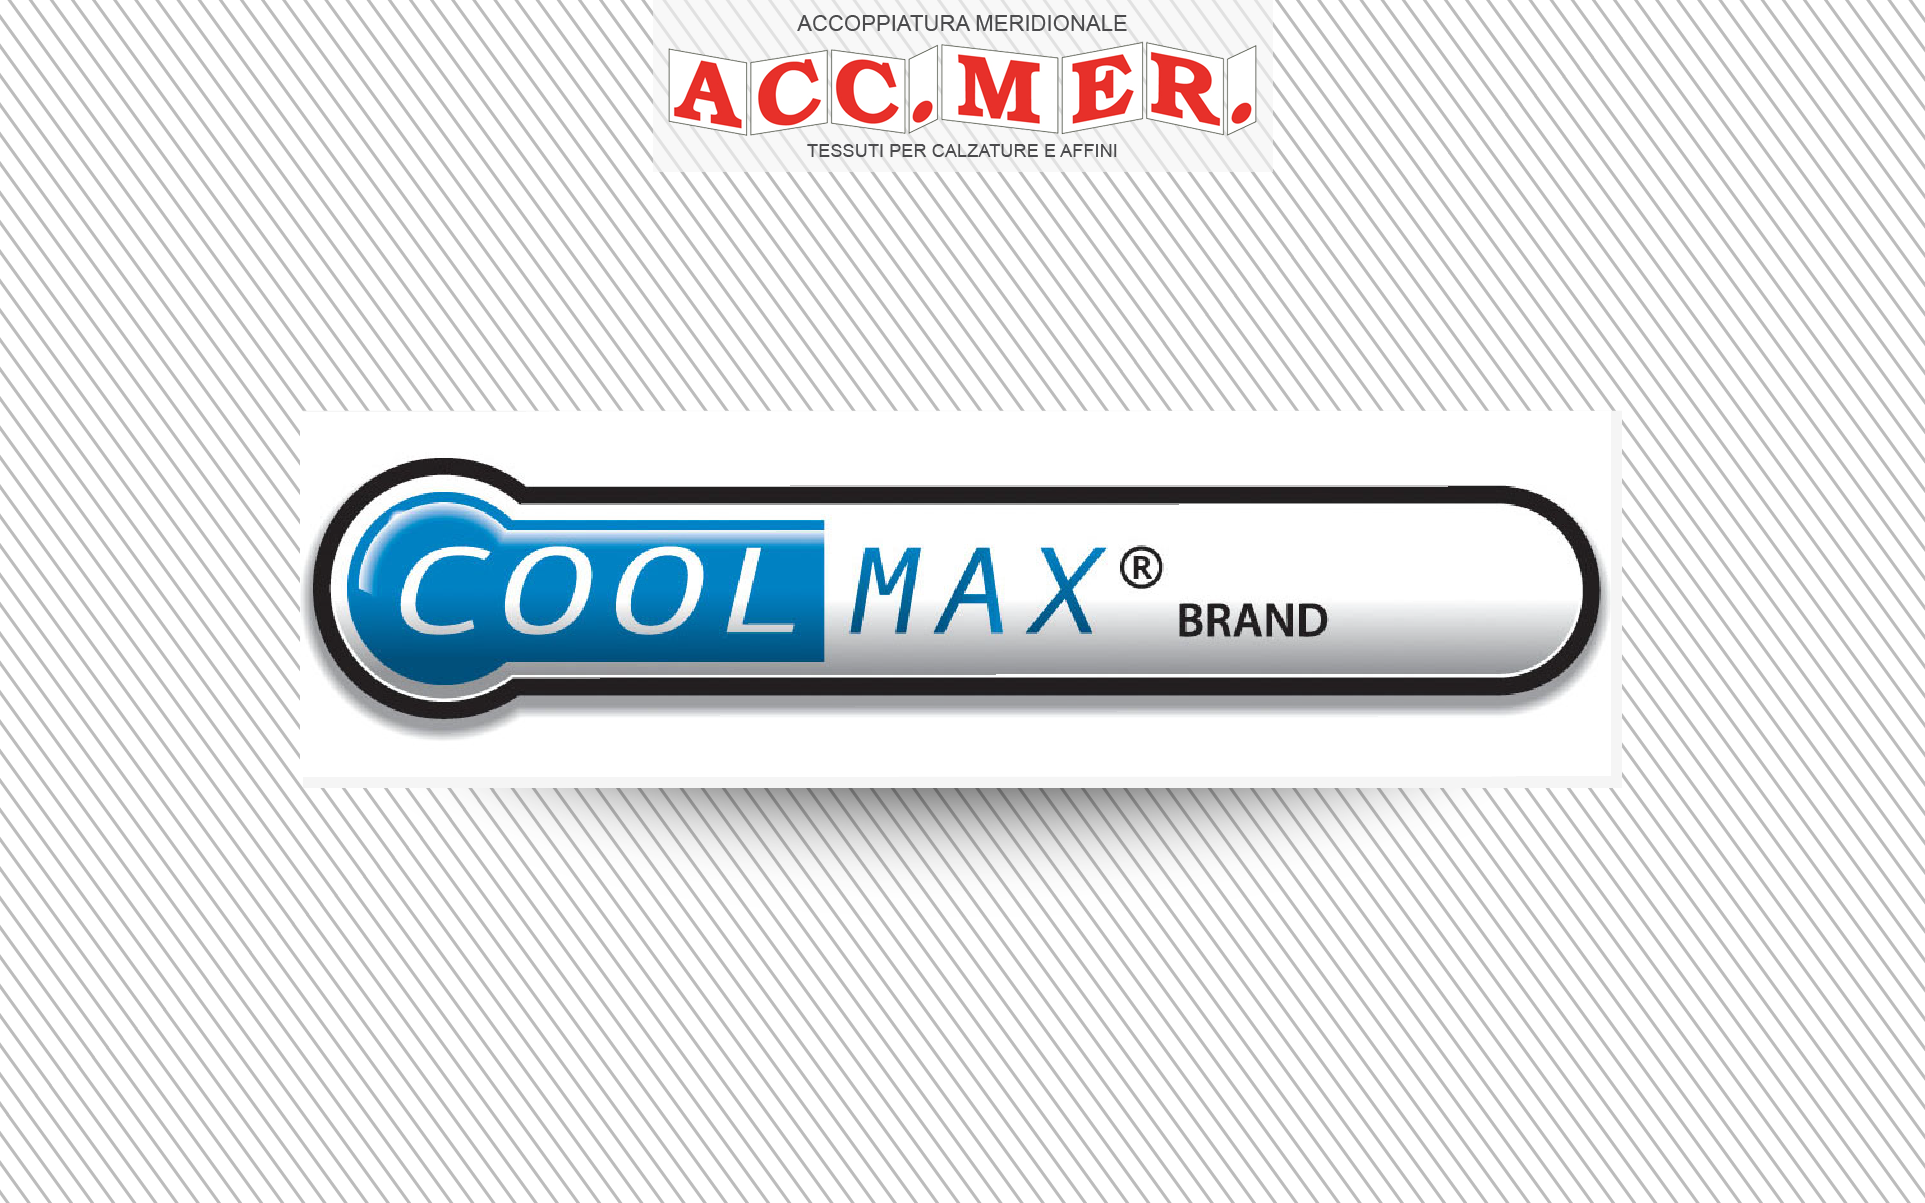 accmer-box-accoppiatura-tessuti-speciali-coolmax